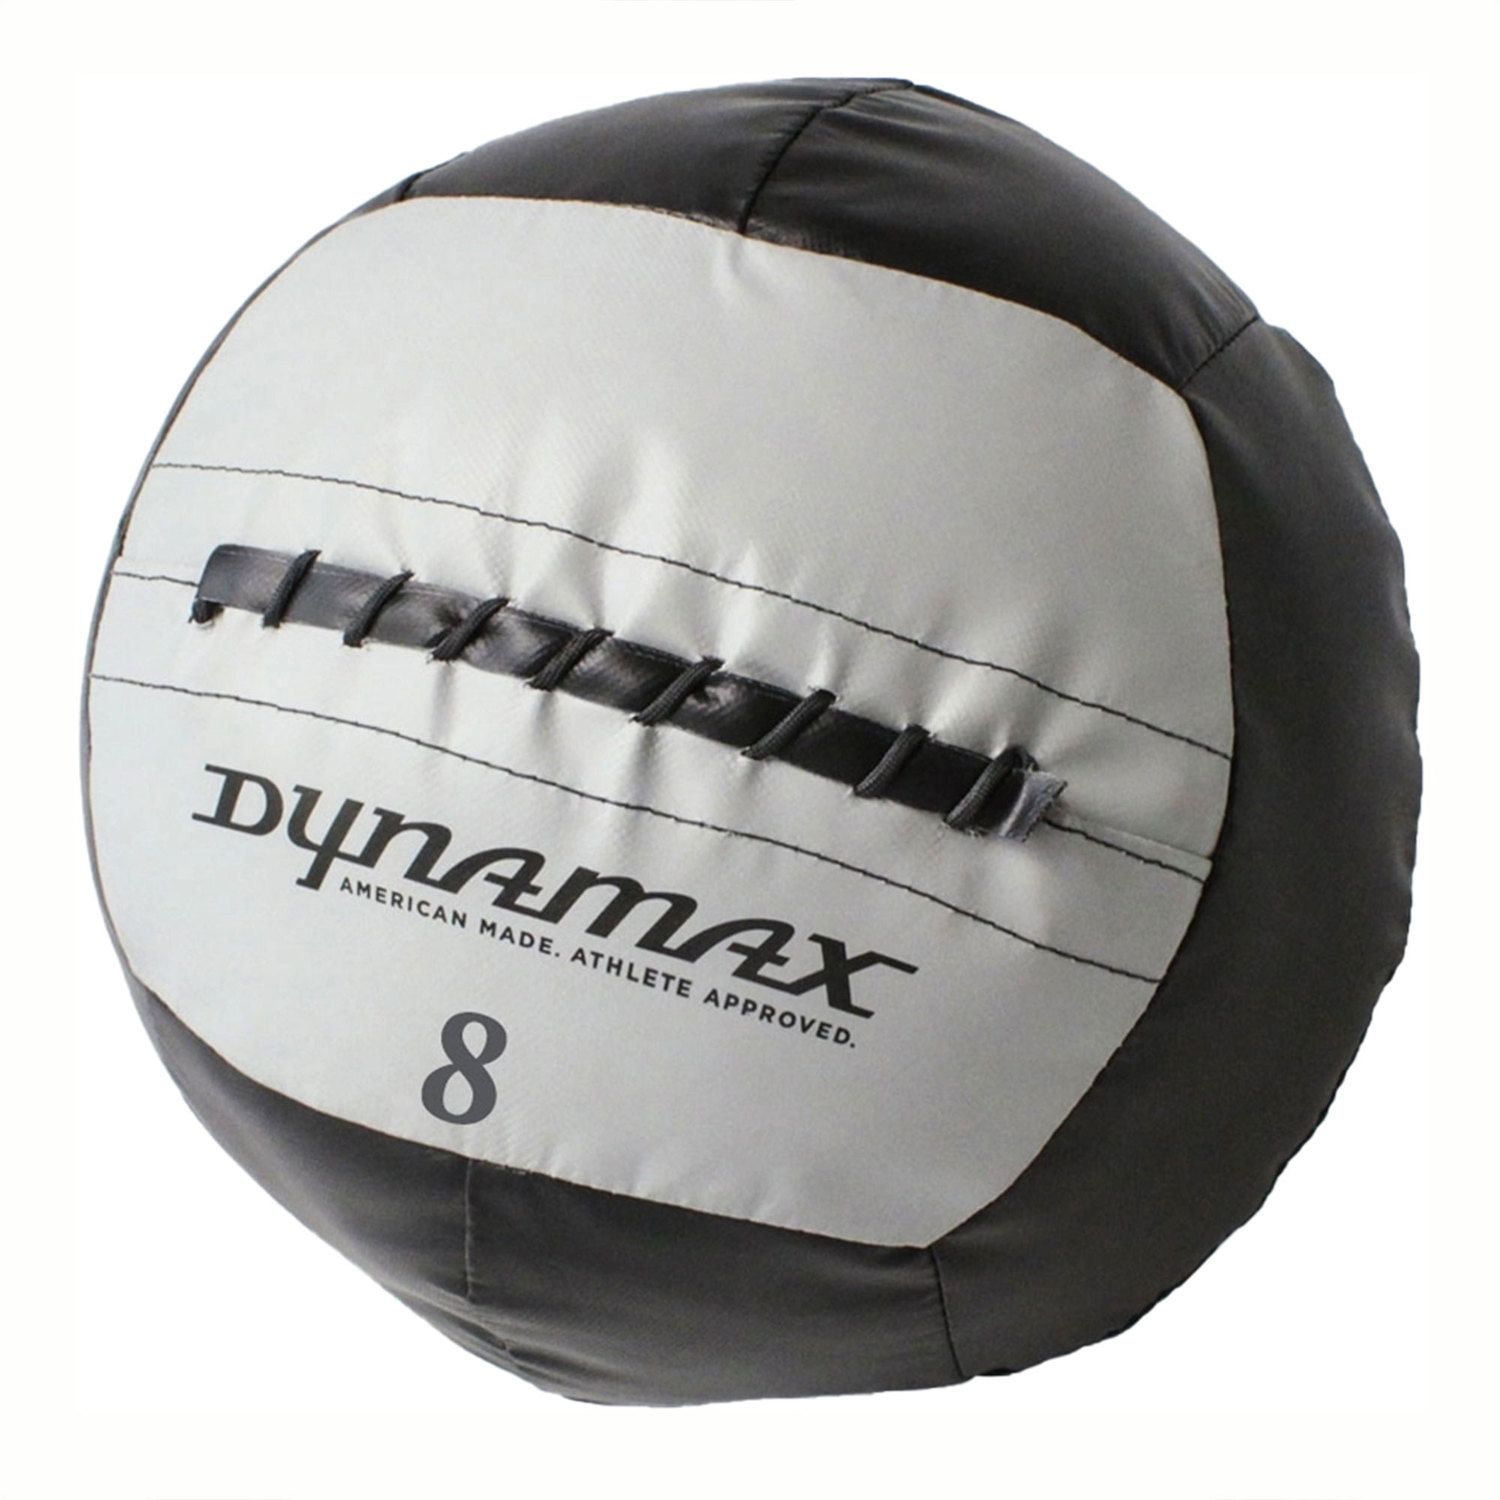 Image for Dynamax Accelerator I 8 Pound 4 Inch Diameter Fitness Medicine Ball, Black/Gray at Kohl's.